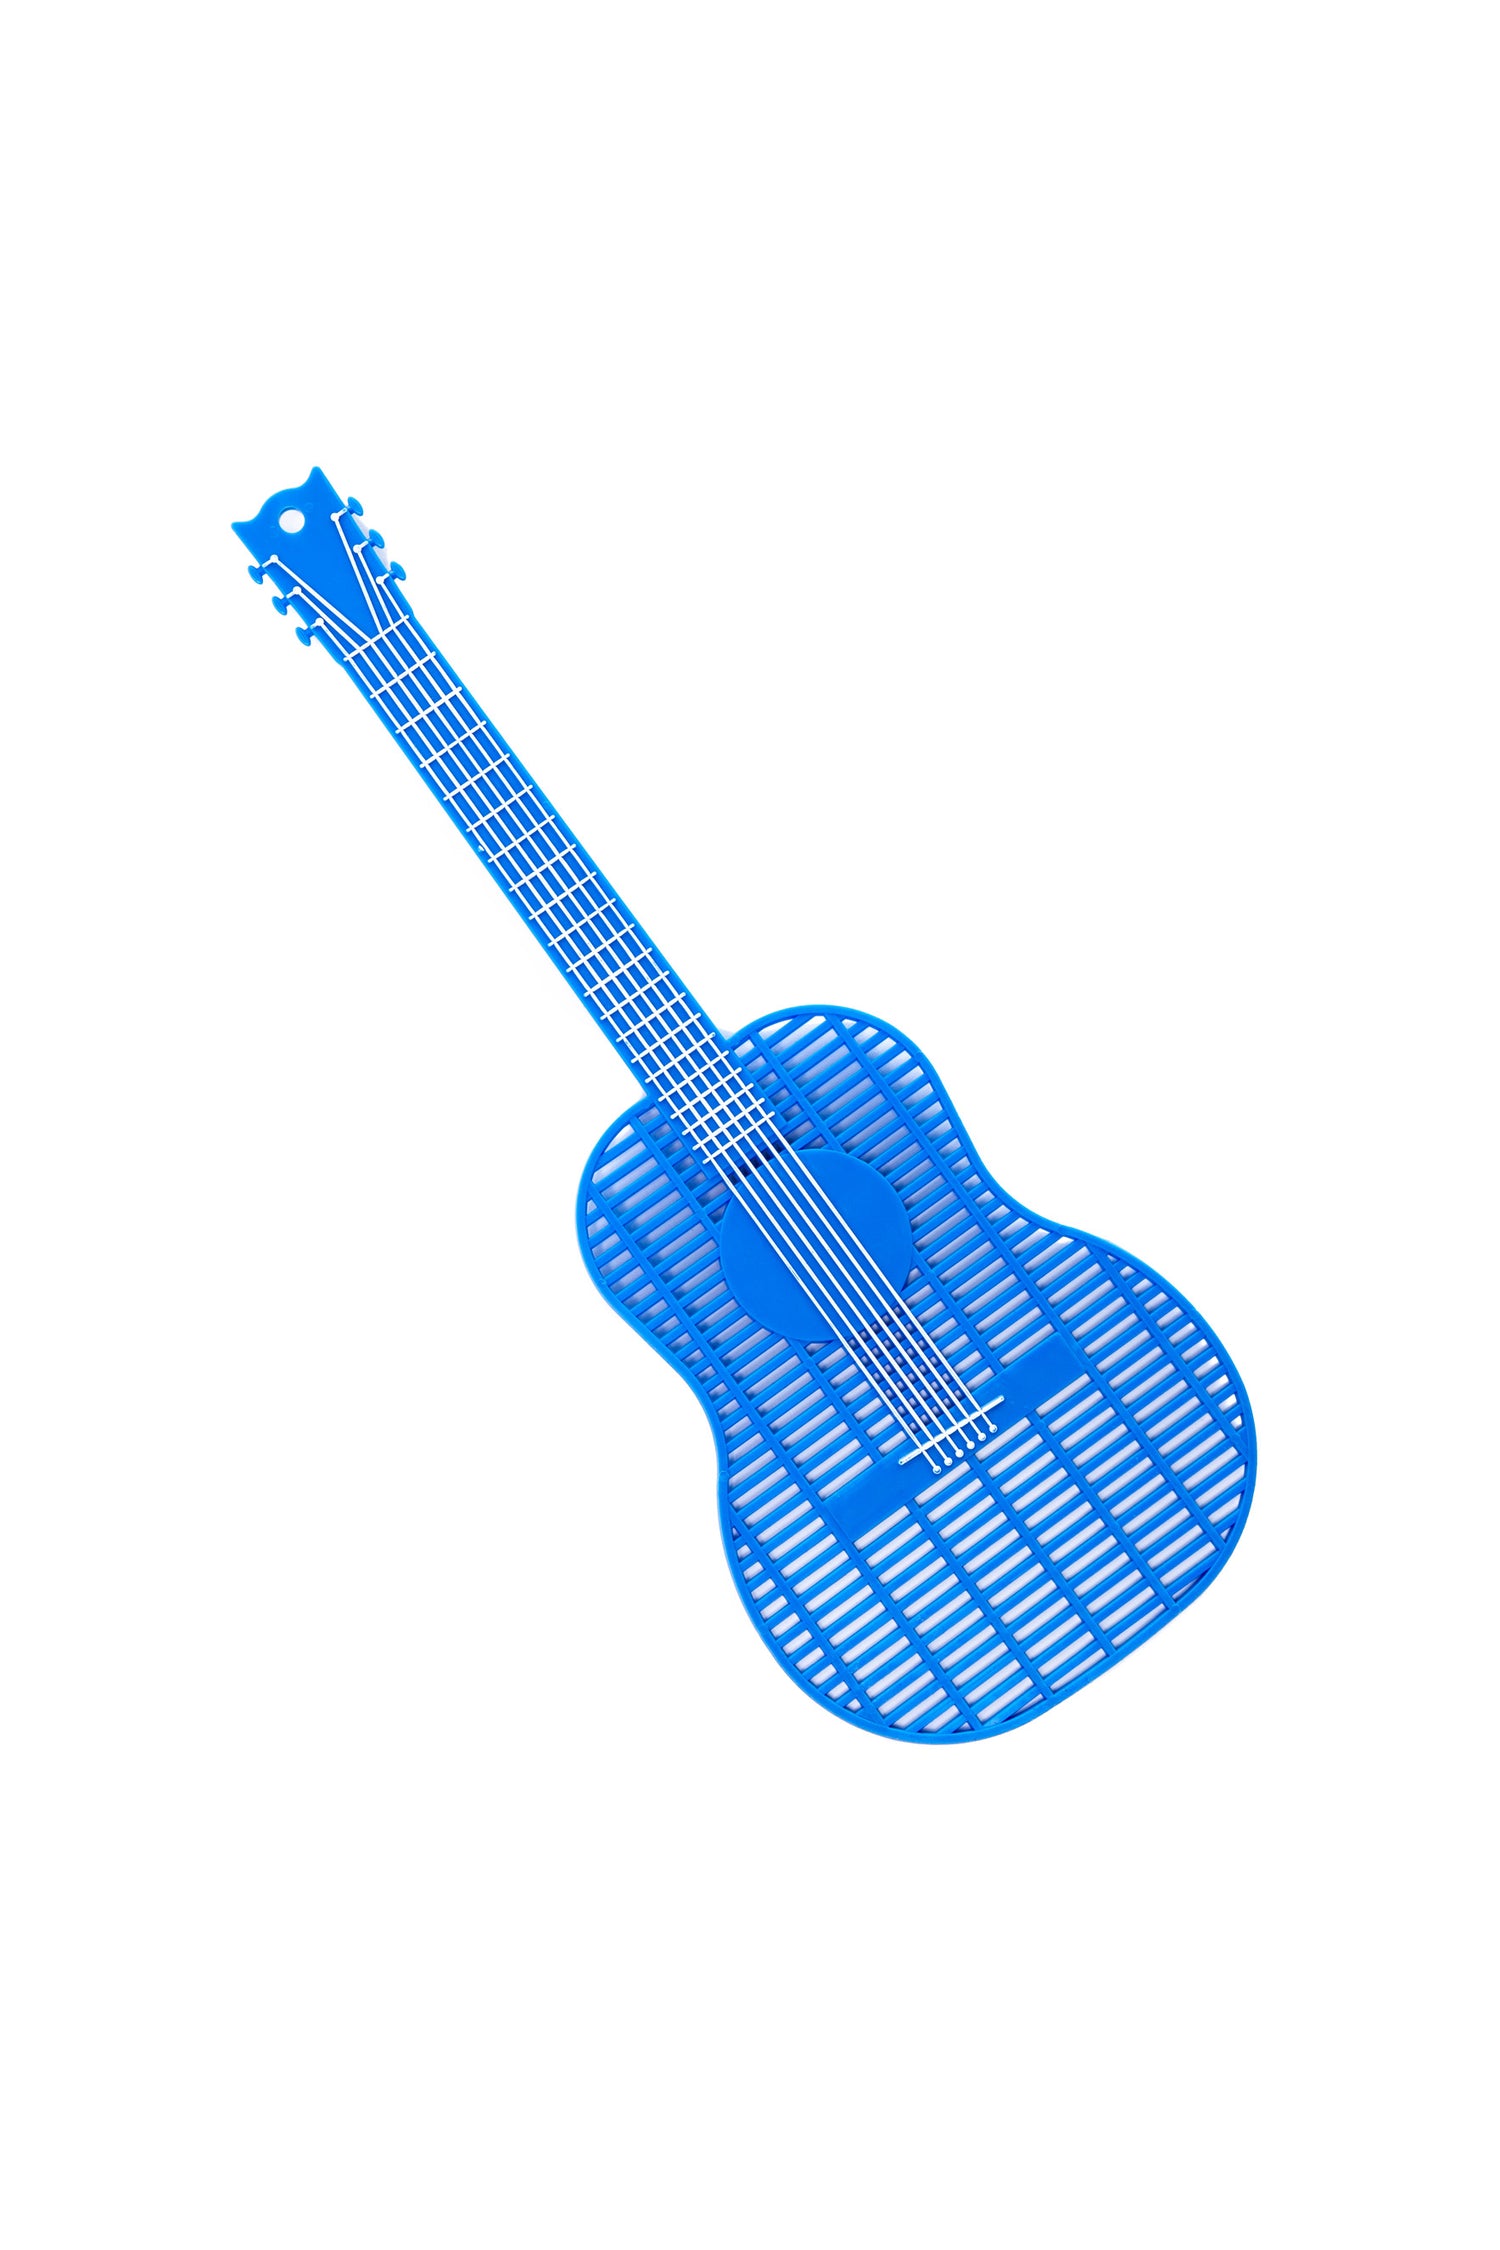 Opry Guitar Flyswatter